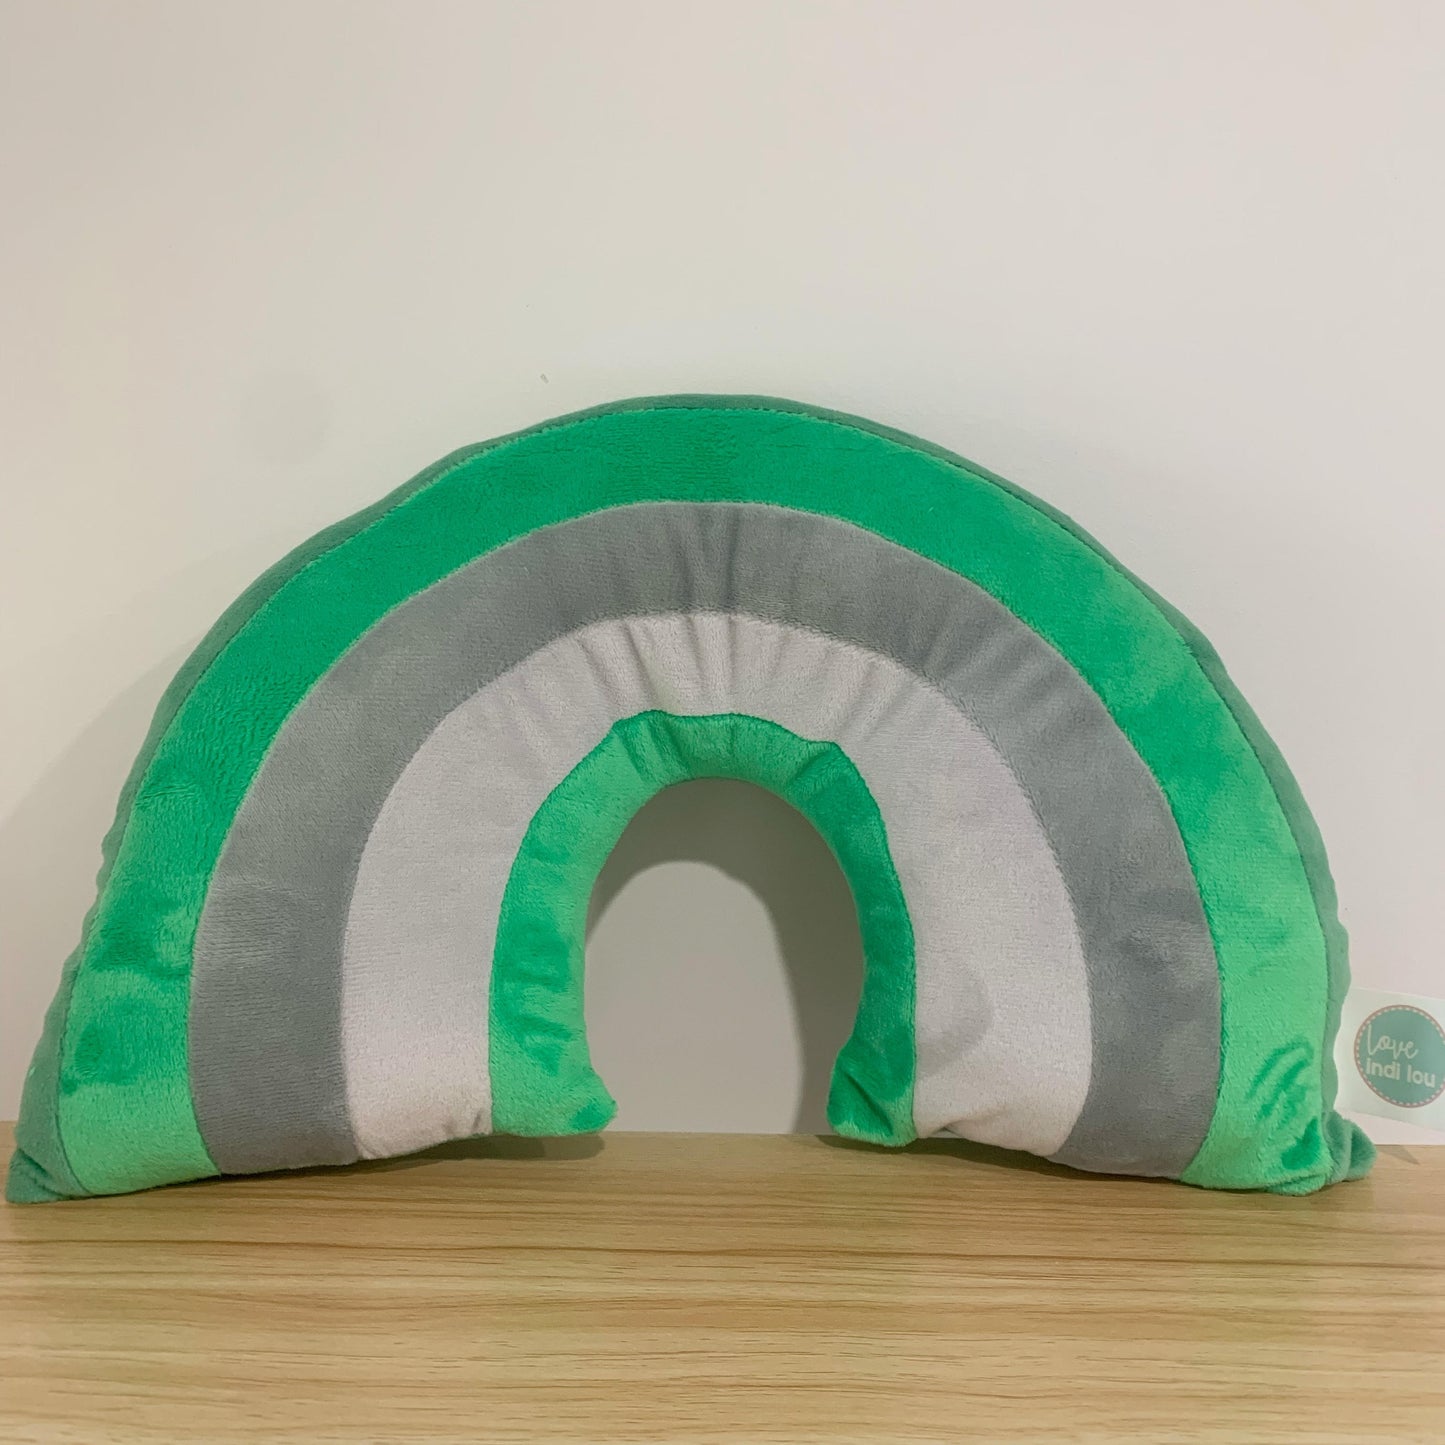 Rainbow Cushions - Buy 1 GET 1 HALF PRICE!